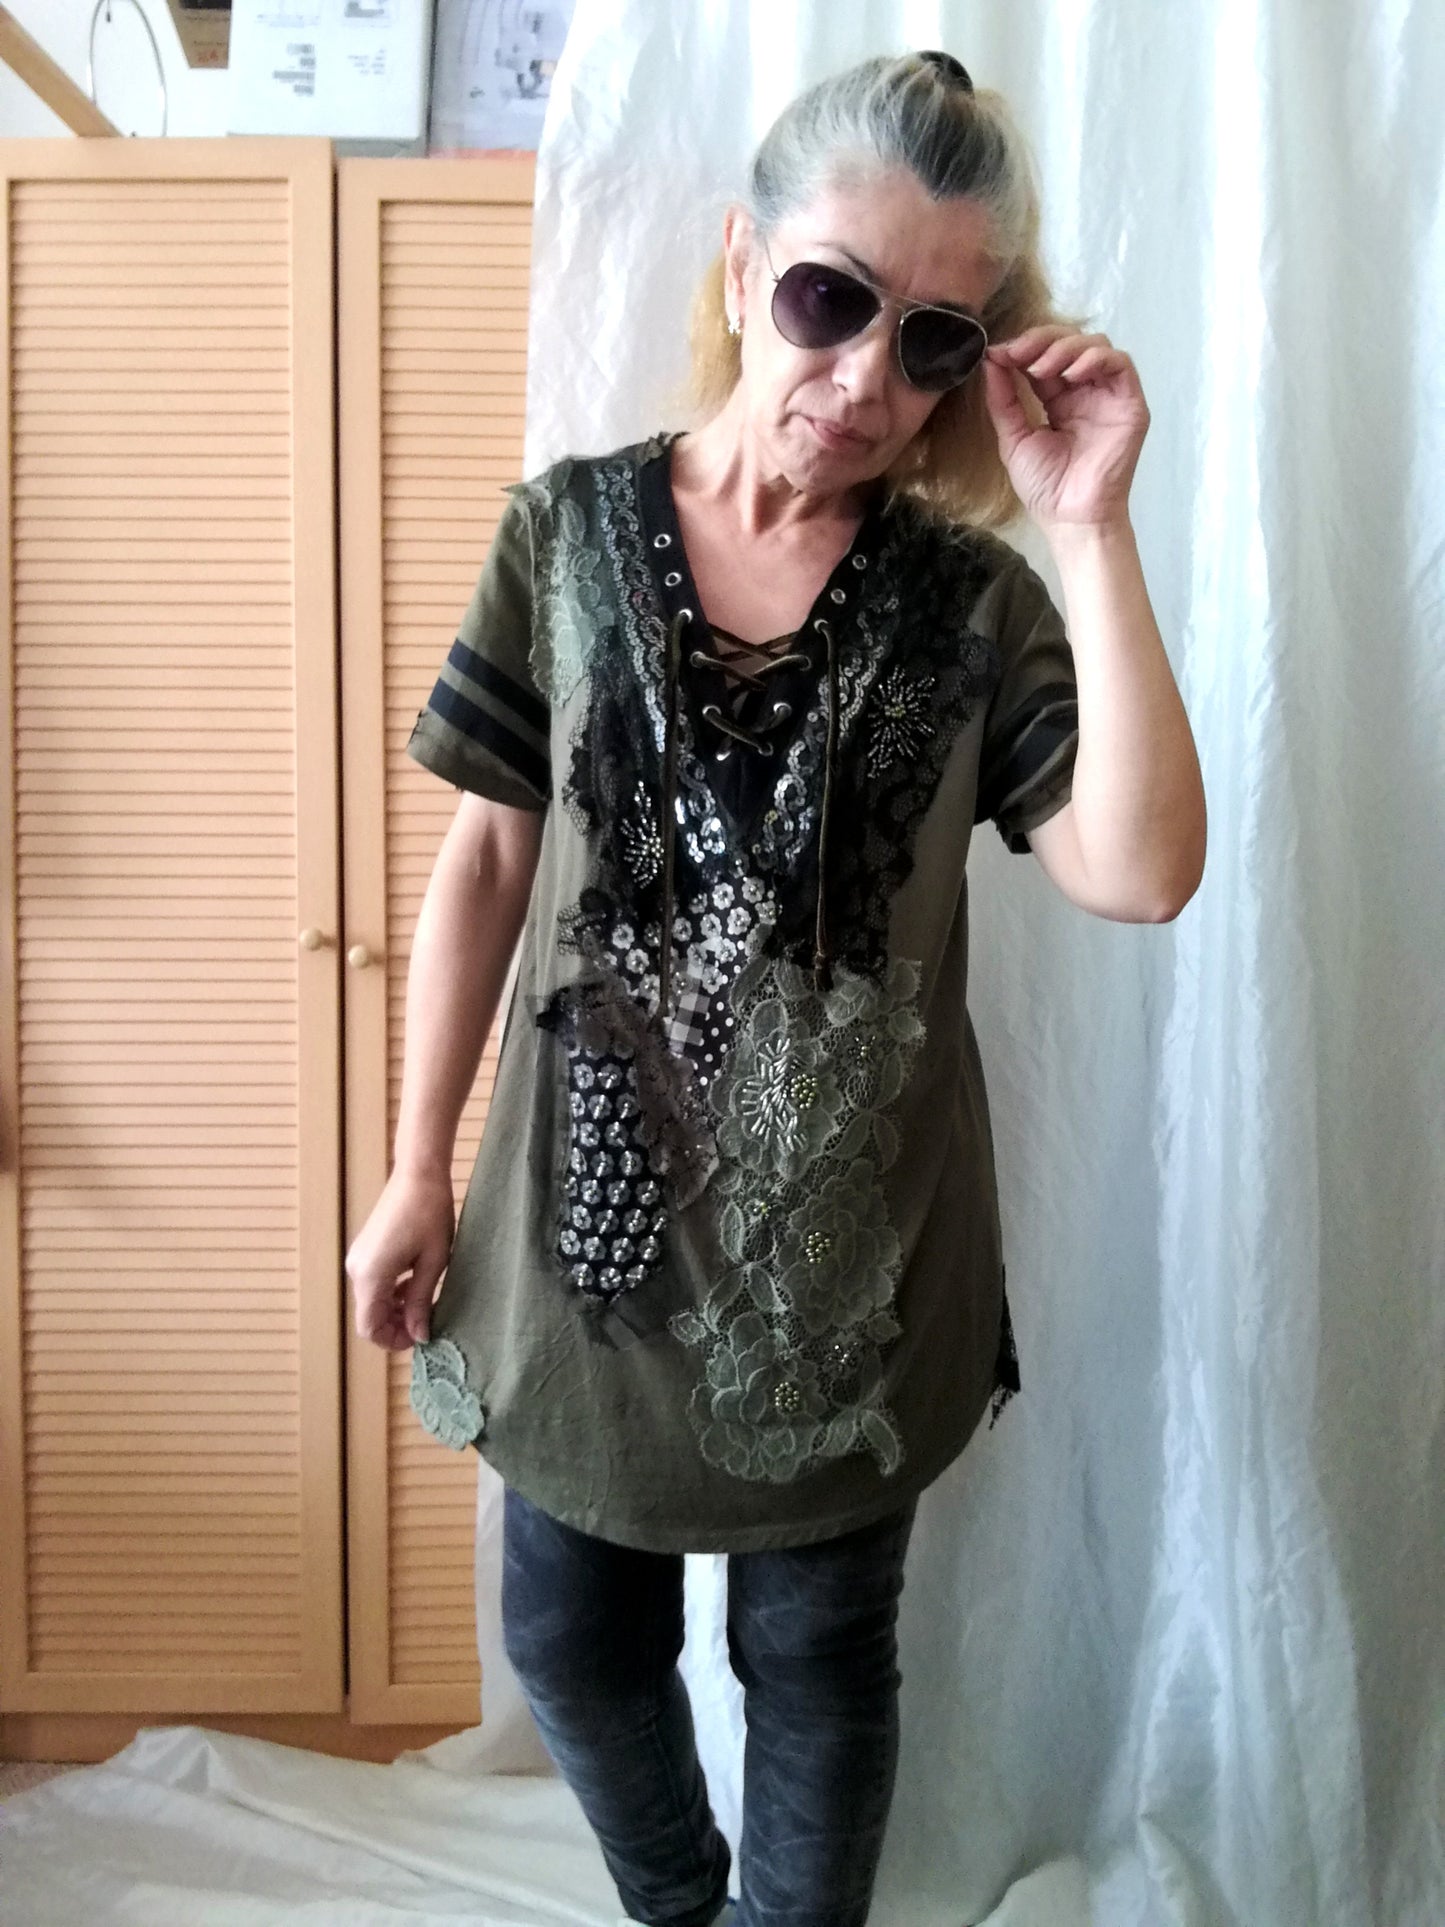 Long T Shirt Dress,M/L Embroidered Khaki Top